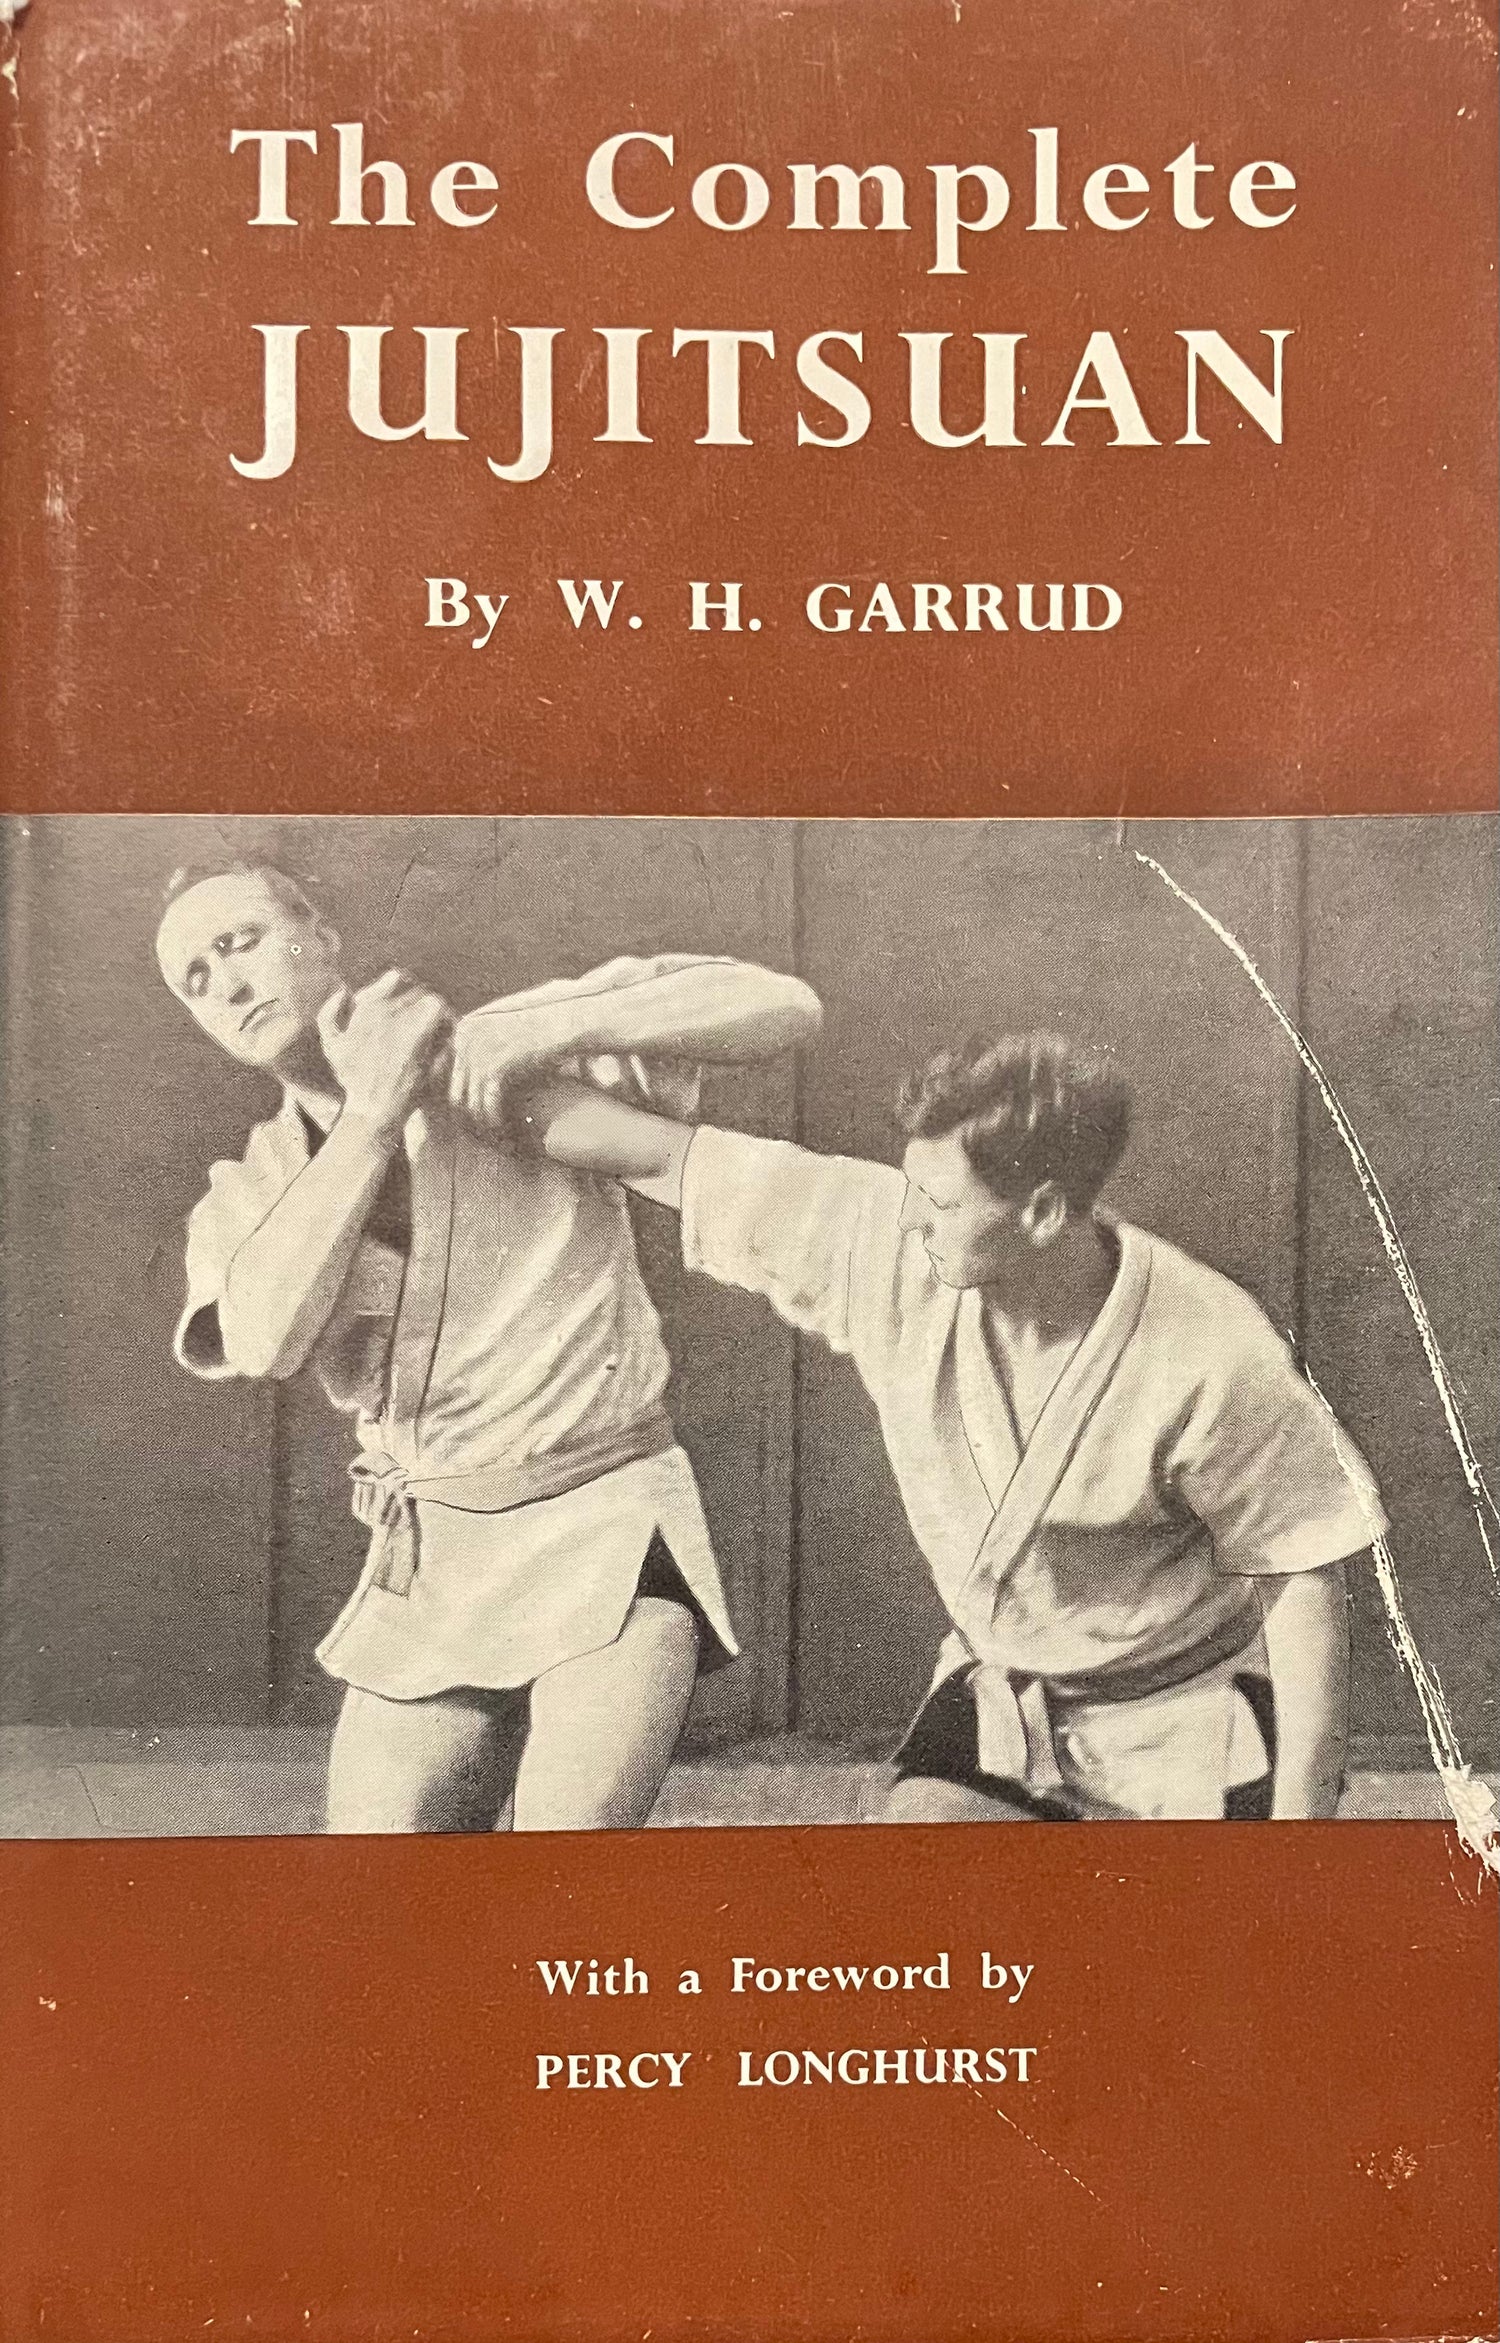 The Complete Jujitsuan Book by William Garrud (ハードカバー) (中古)